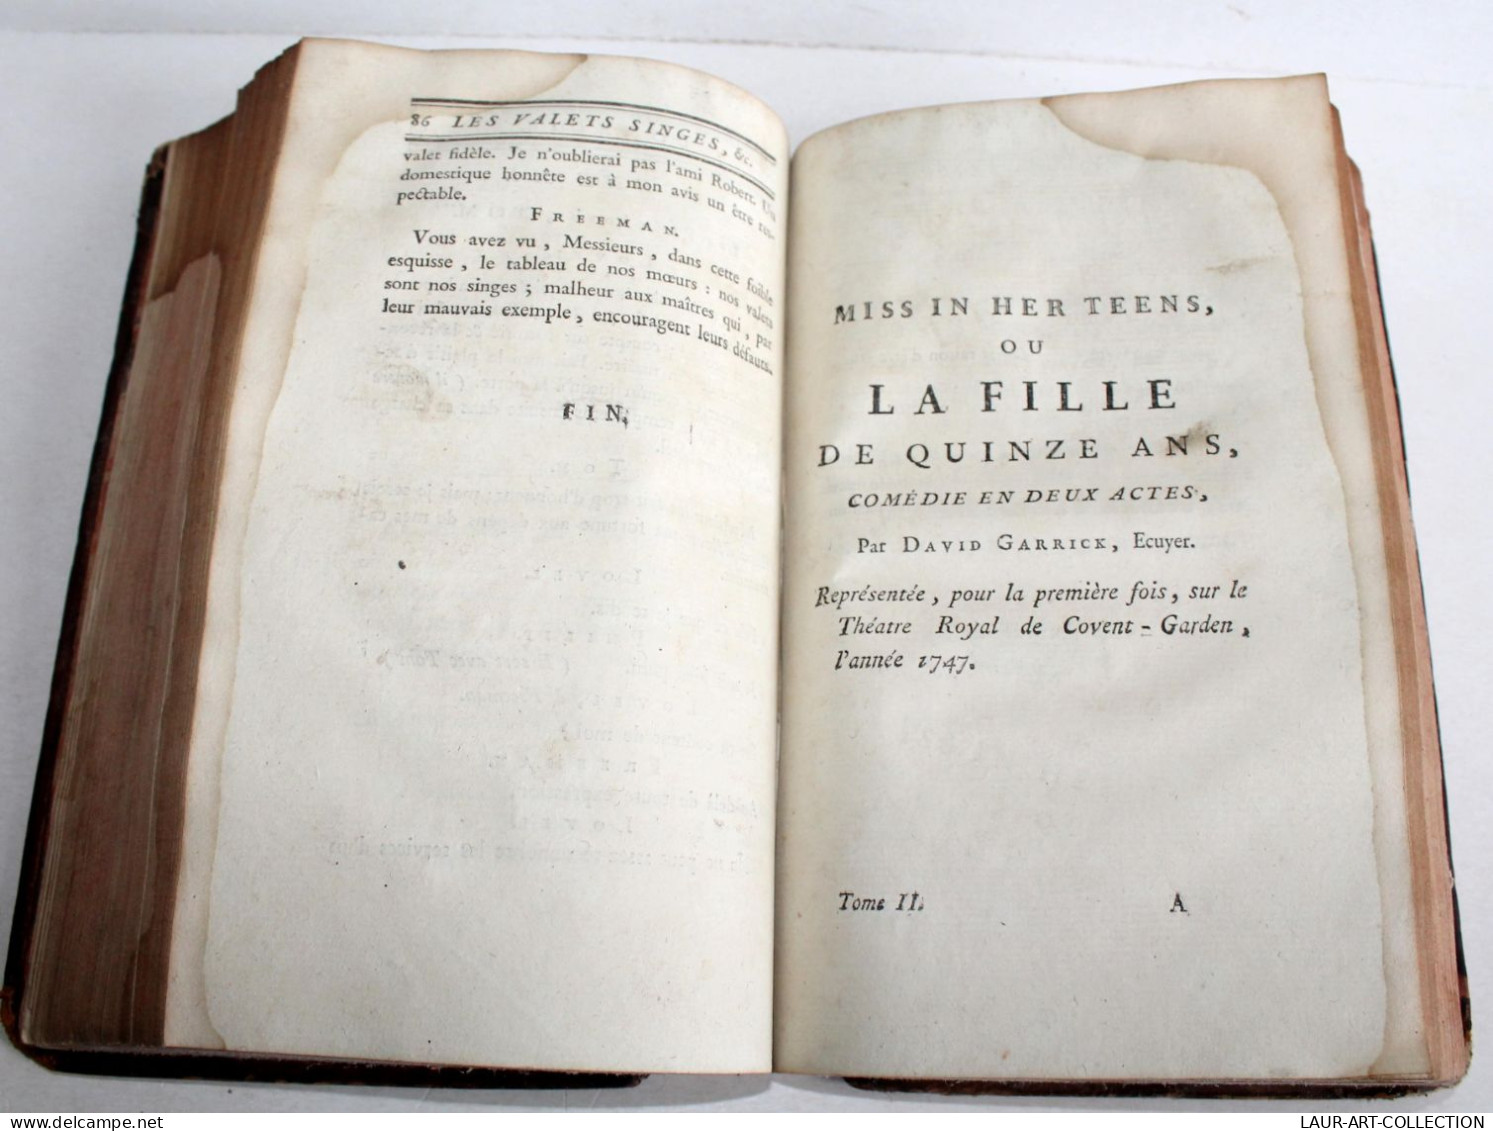 OEUVRES DE DAVID GARRICK ECUYER 8 PIECE THEATRE 1784 CYMON VALET MENTEUR LILLIPUT / LIVRE ANCIEN XVIIIe SIECLE (1303.32)